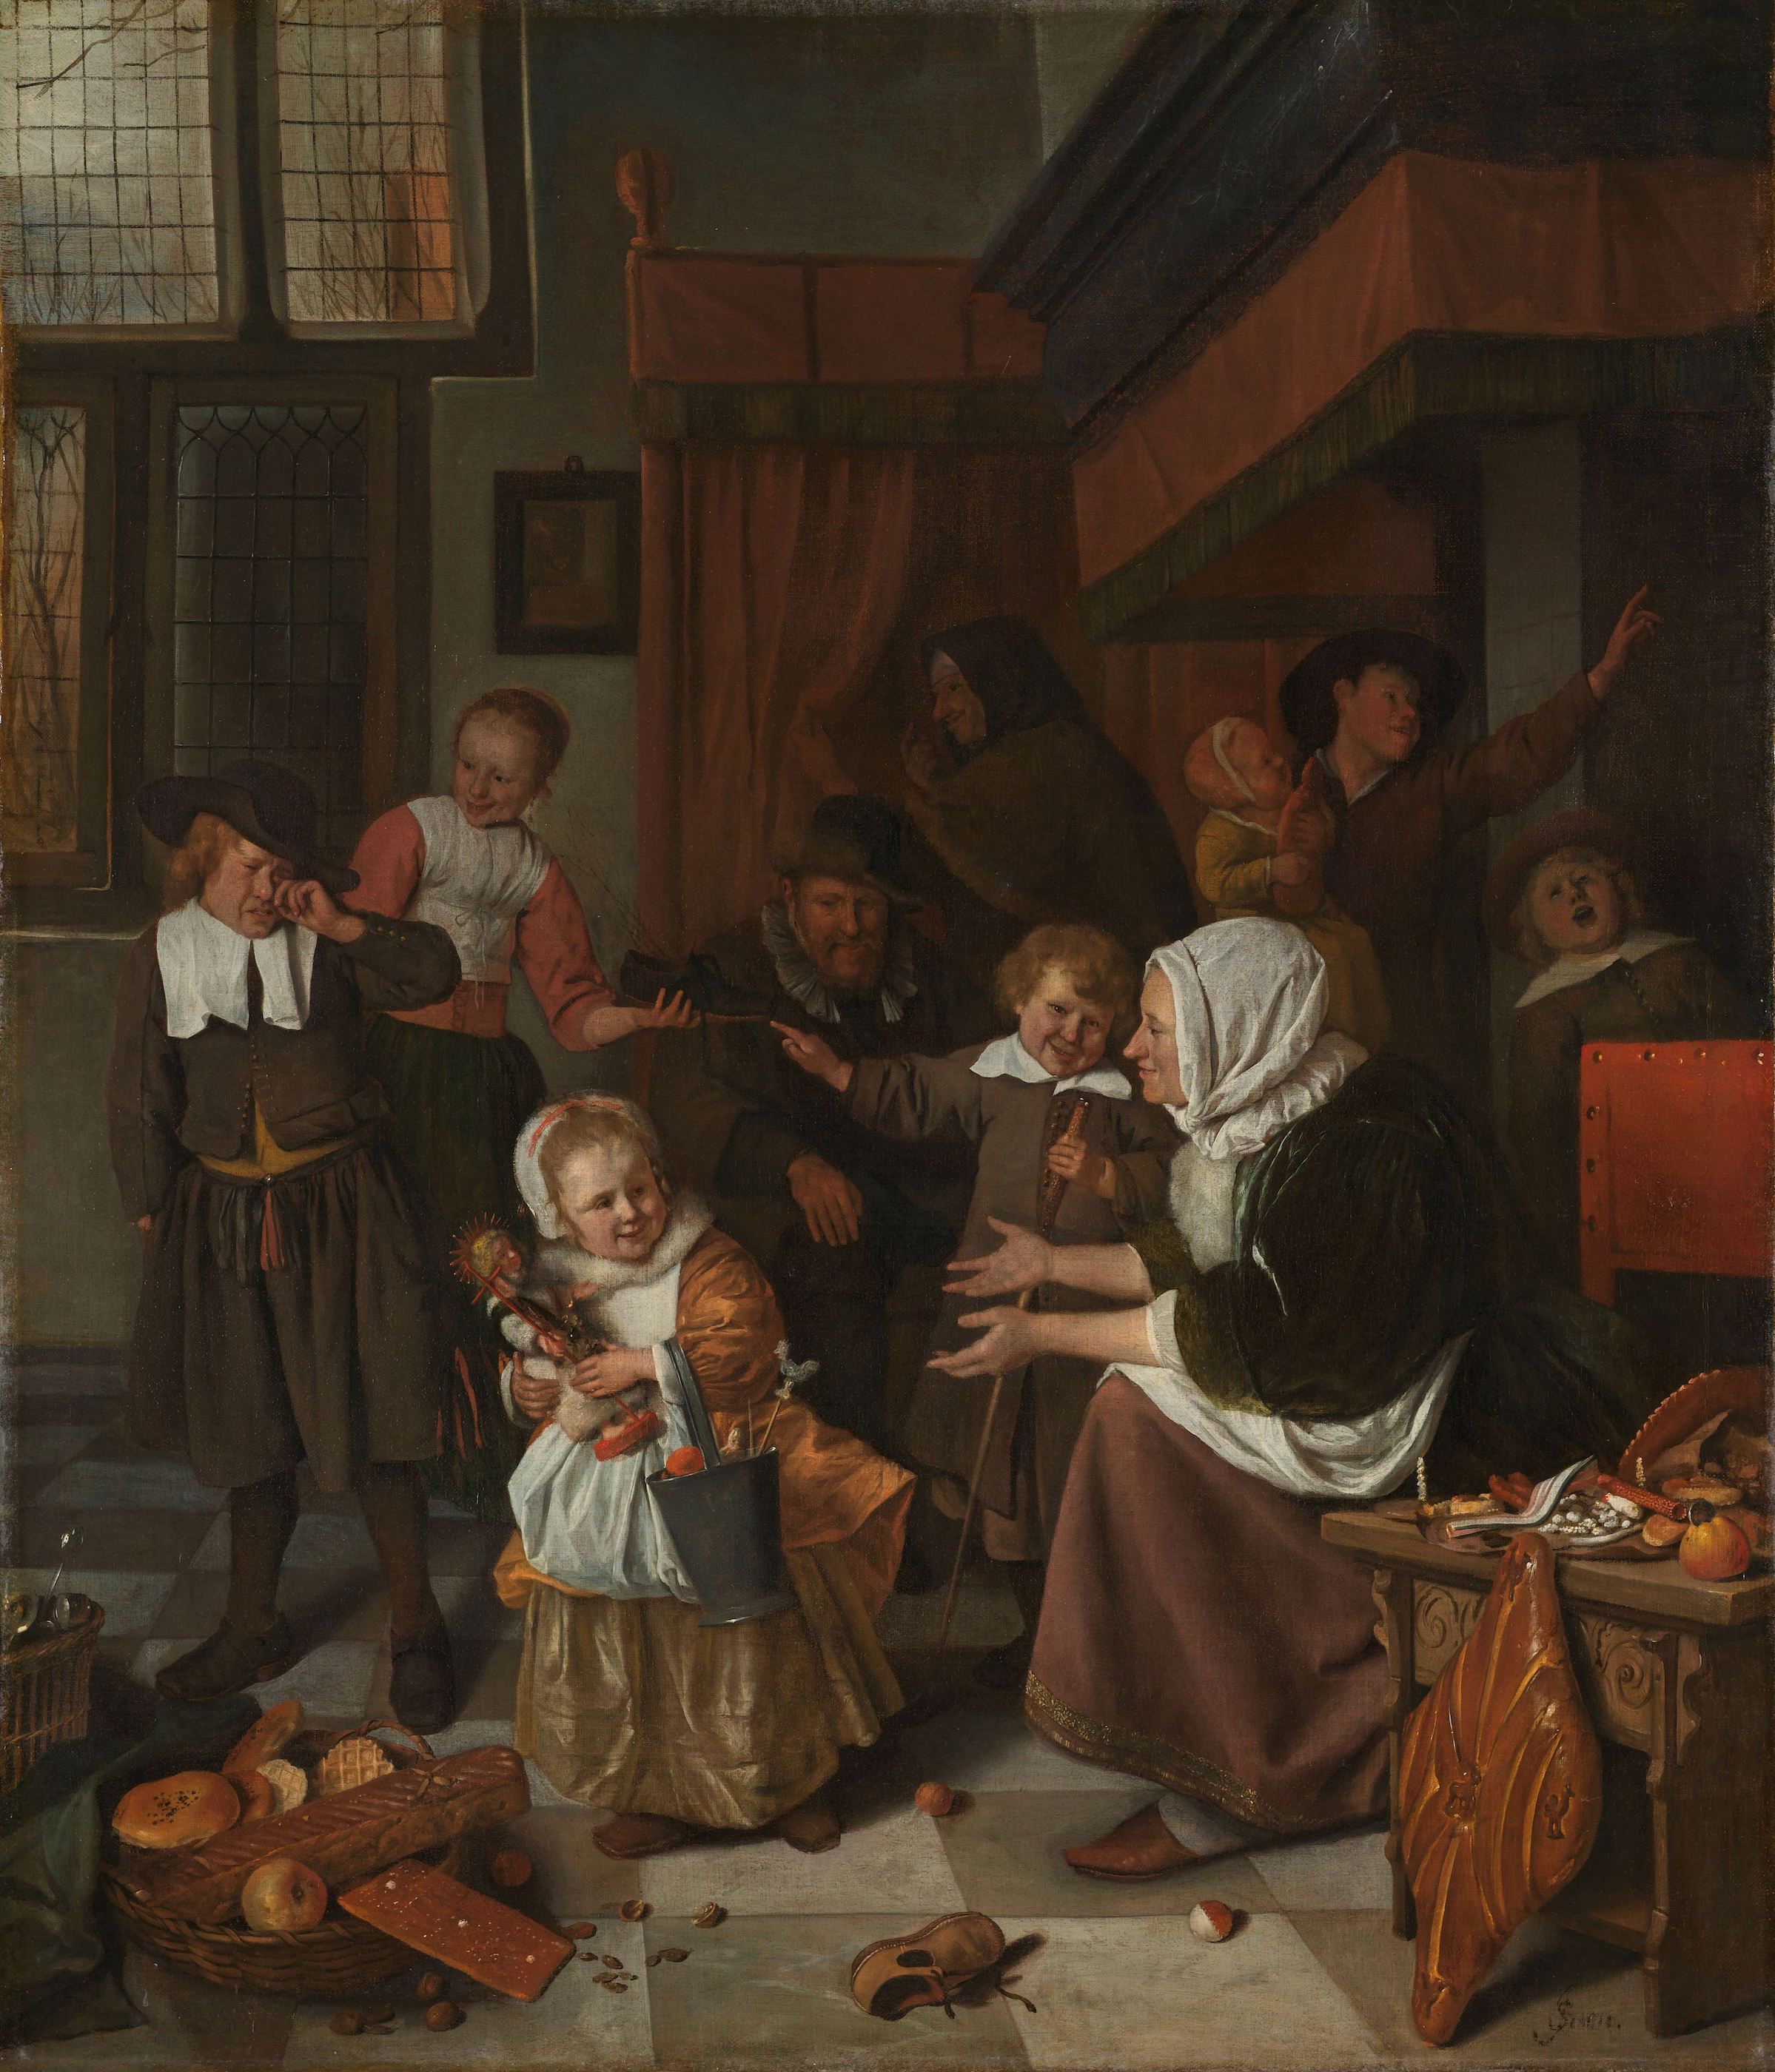 The Feast of St Nicholas by Jan Steen - 1665 - 1668 - 82 x 70.5 cm Rijksmuseum